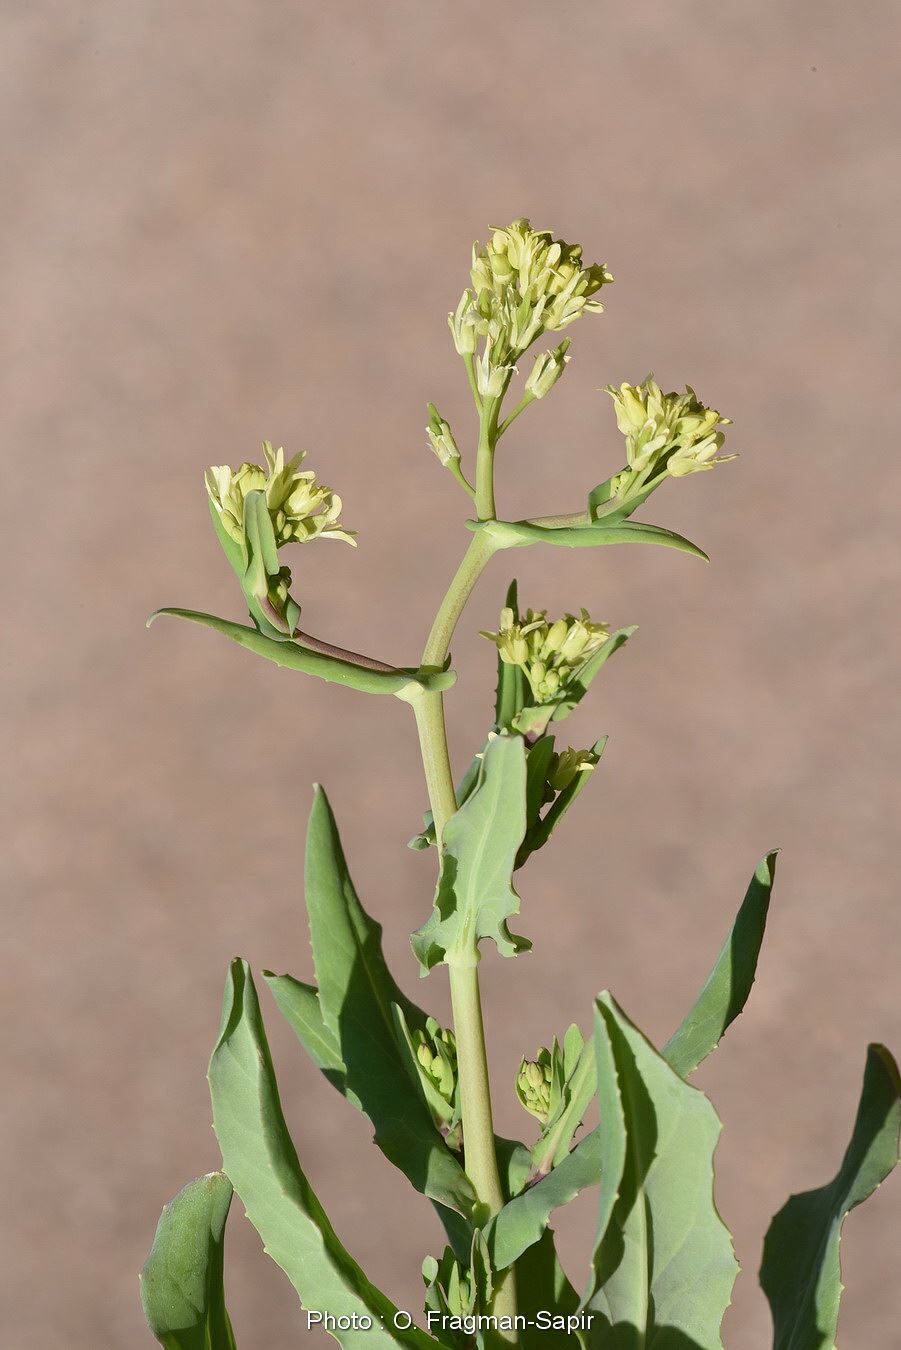 Myagrum perfoliatum - Bird's-eye Cress, Perfoliate Mitre-cress, מיאגרון אוזני, מיאגרון אוזני, מיאגרון אזון